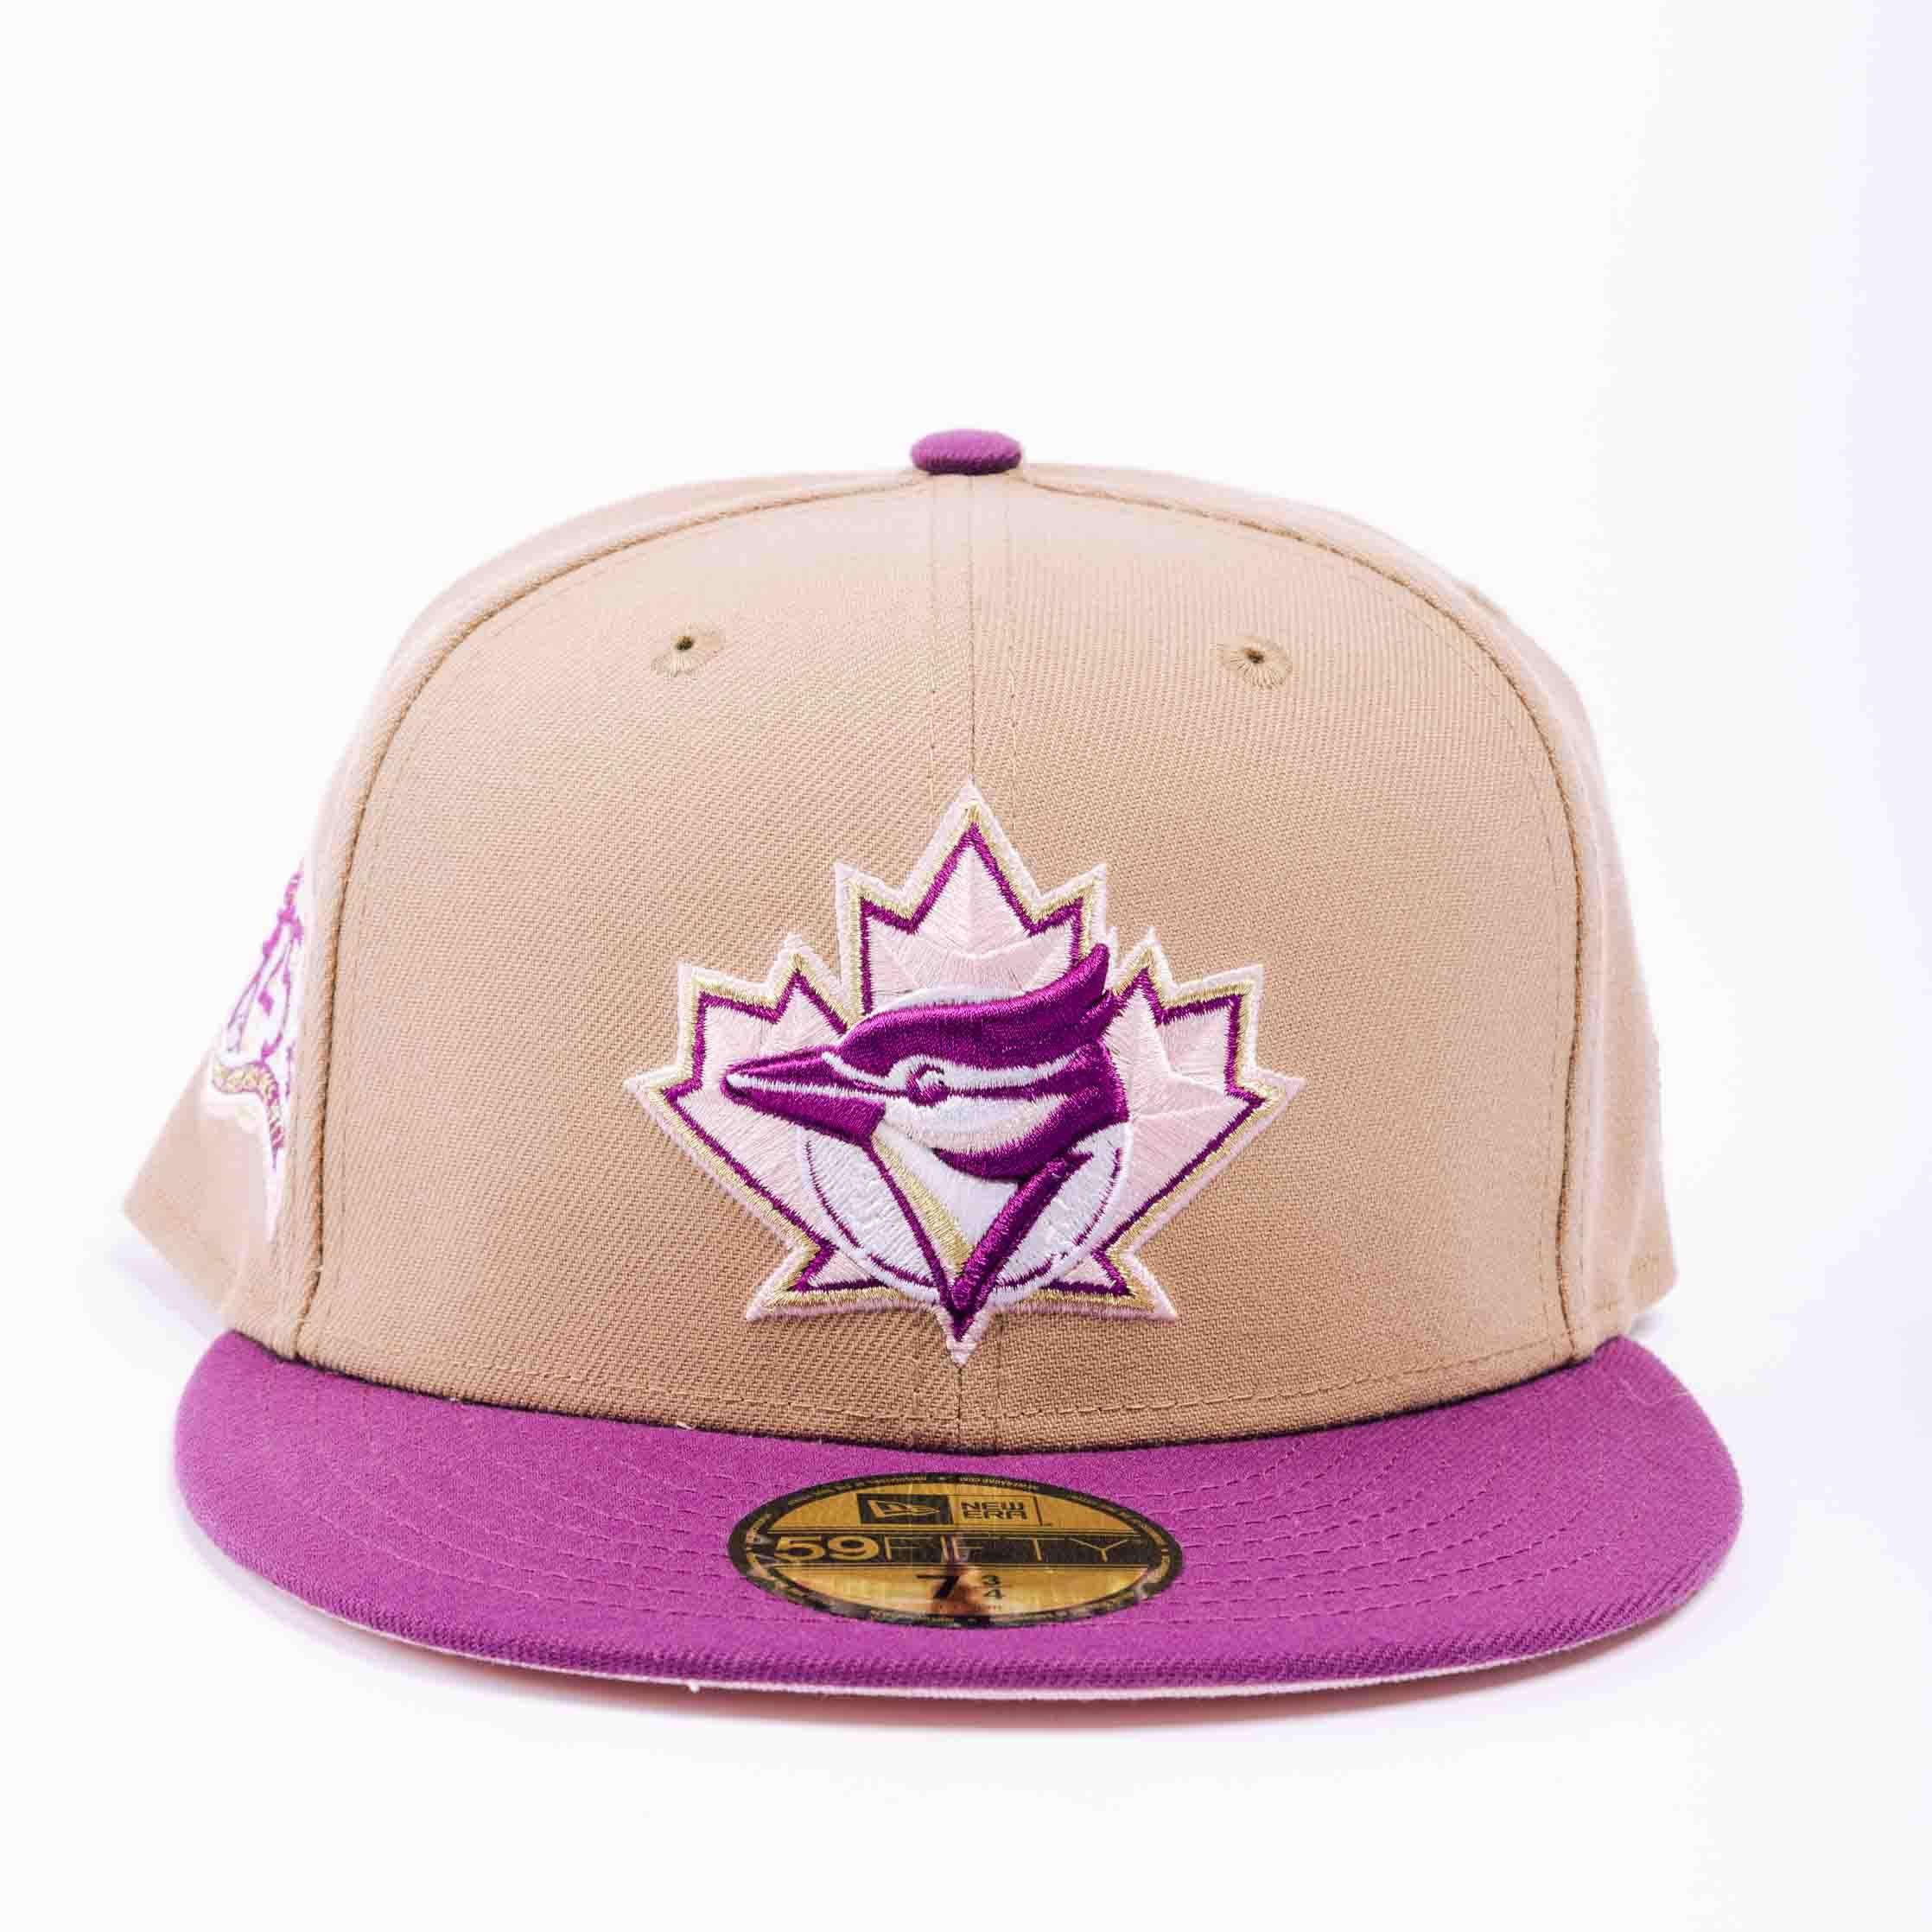 New Era Toronto Blue Jays Fitted Hat